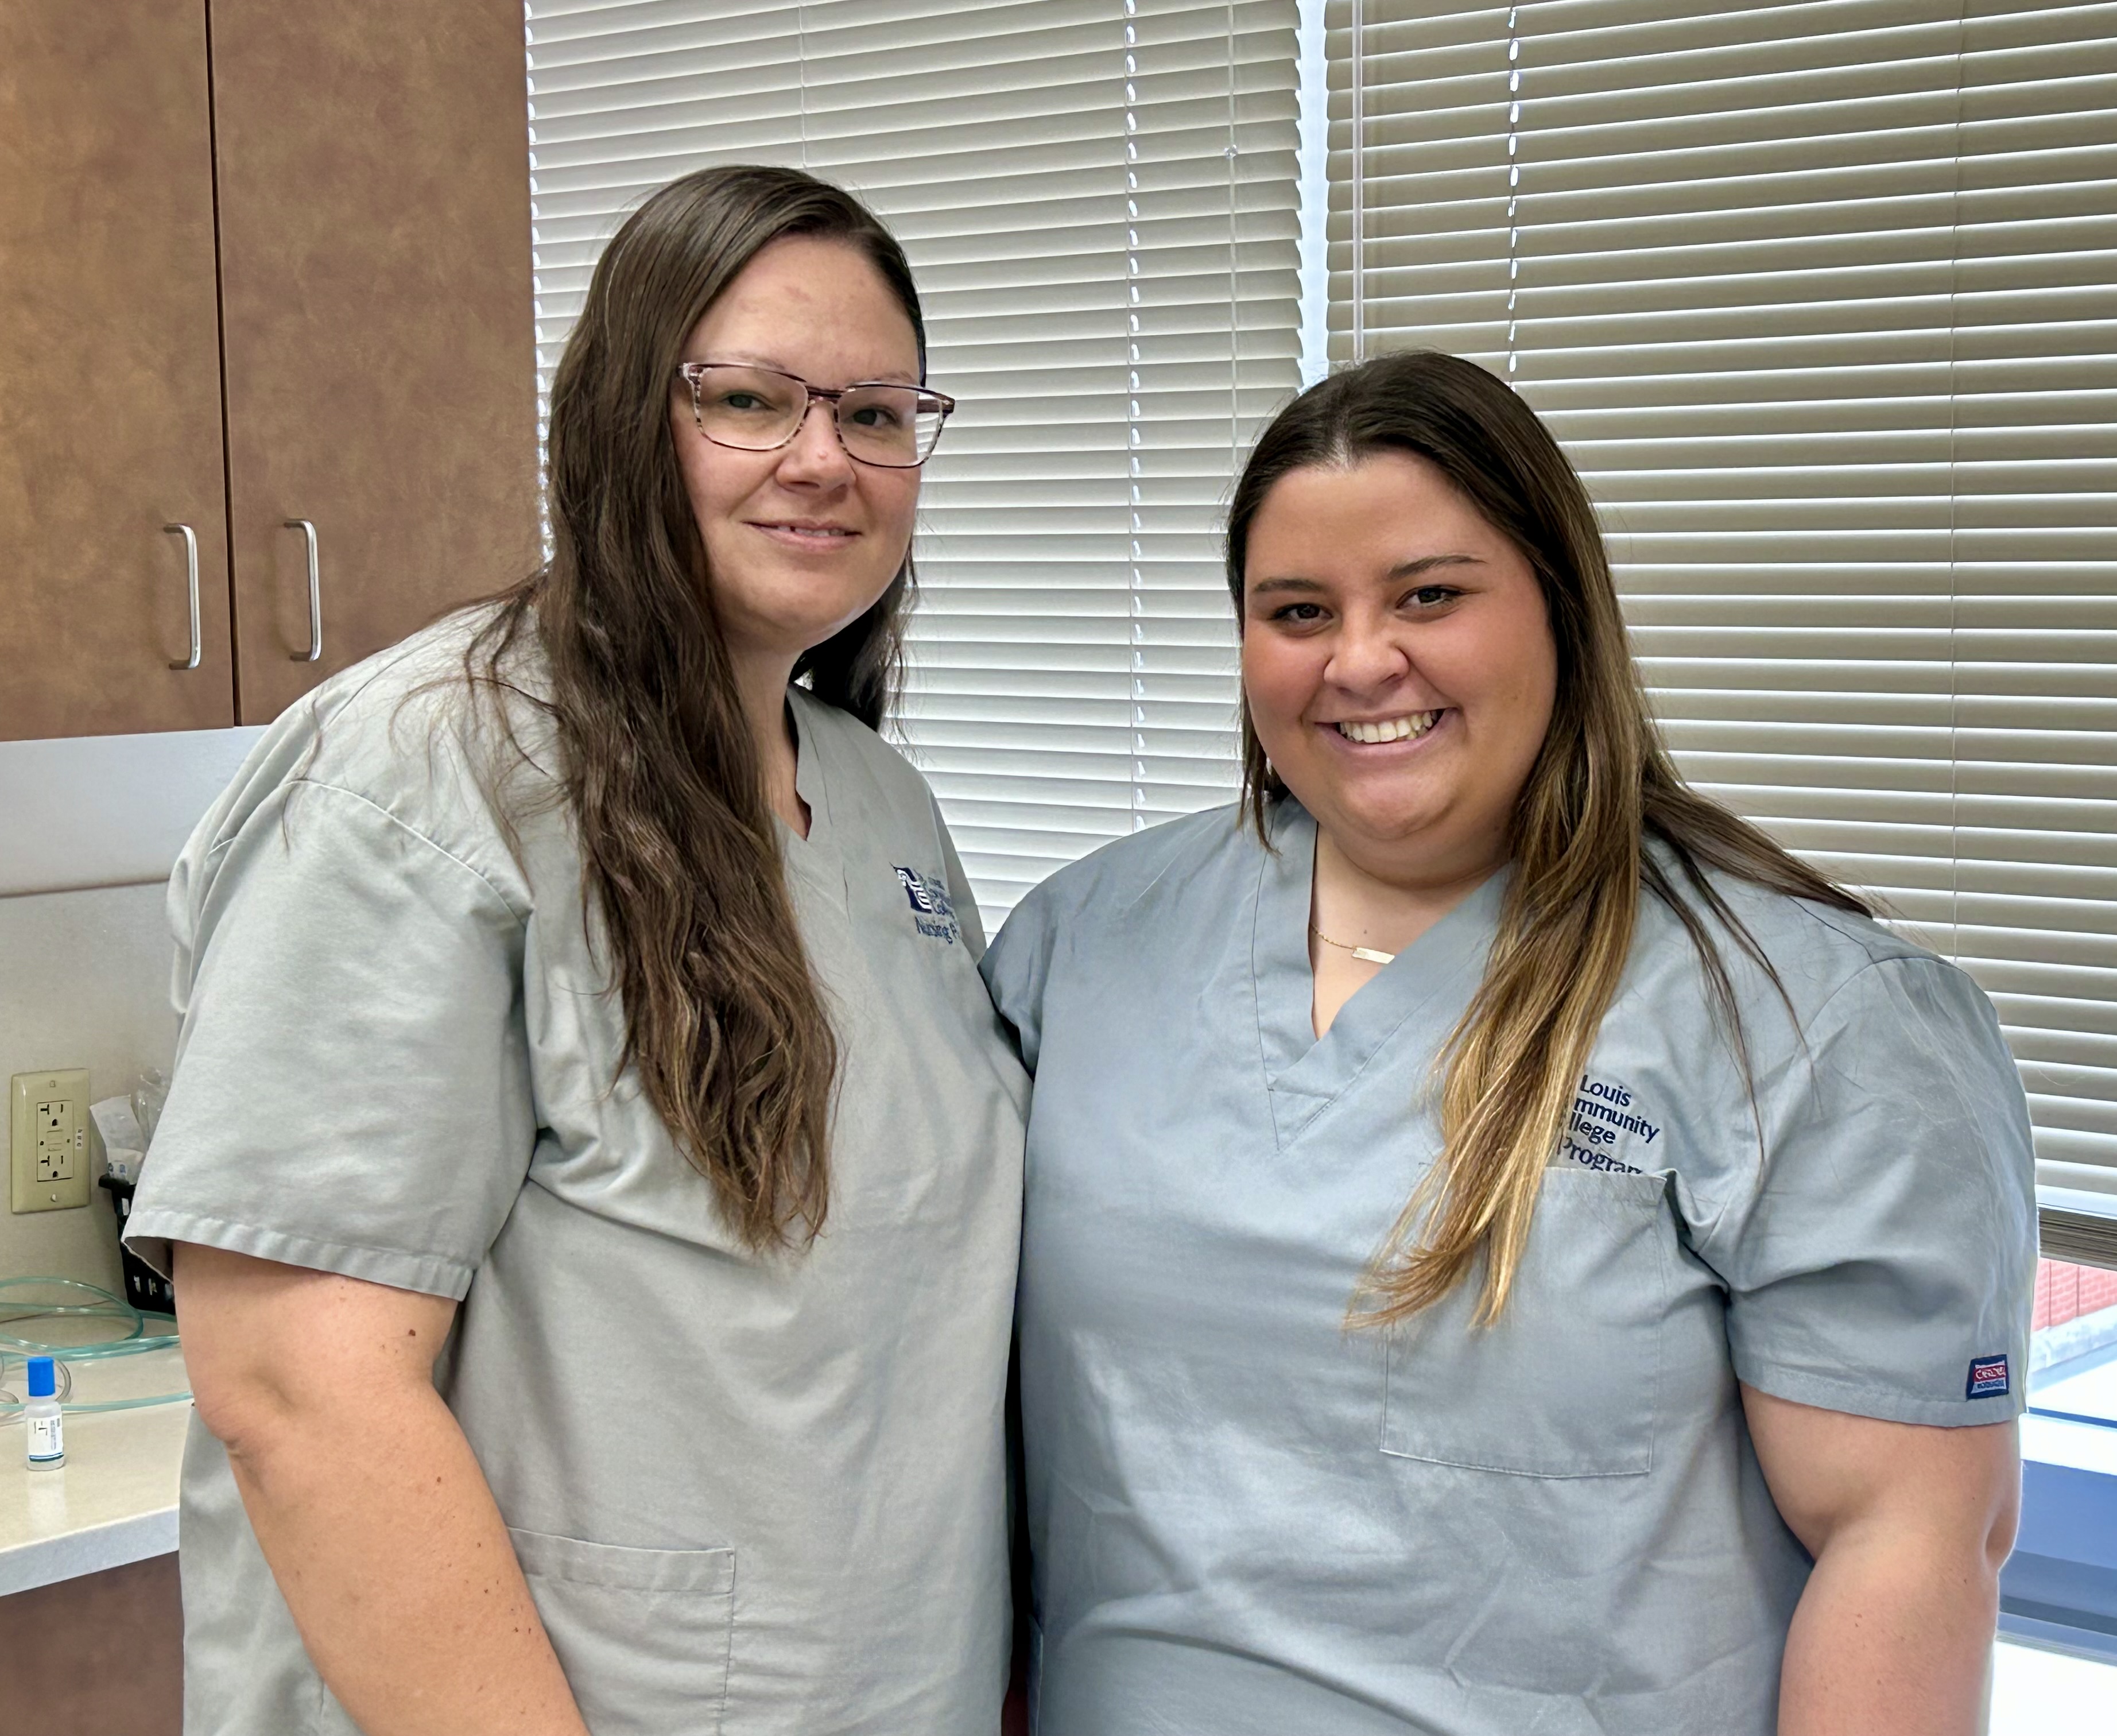 Two nursing students